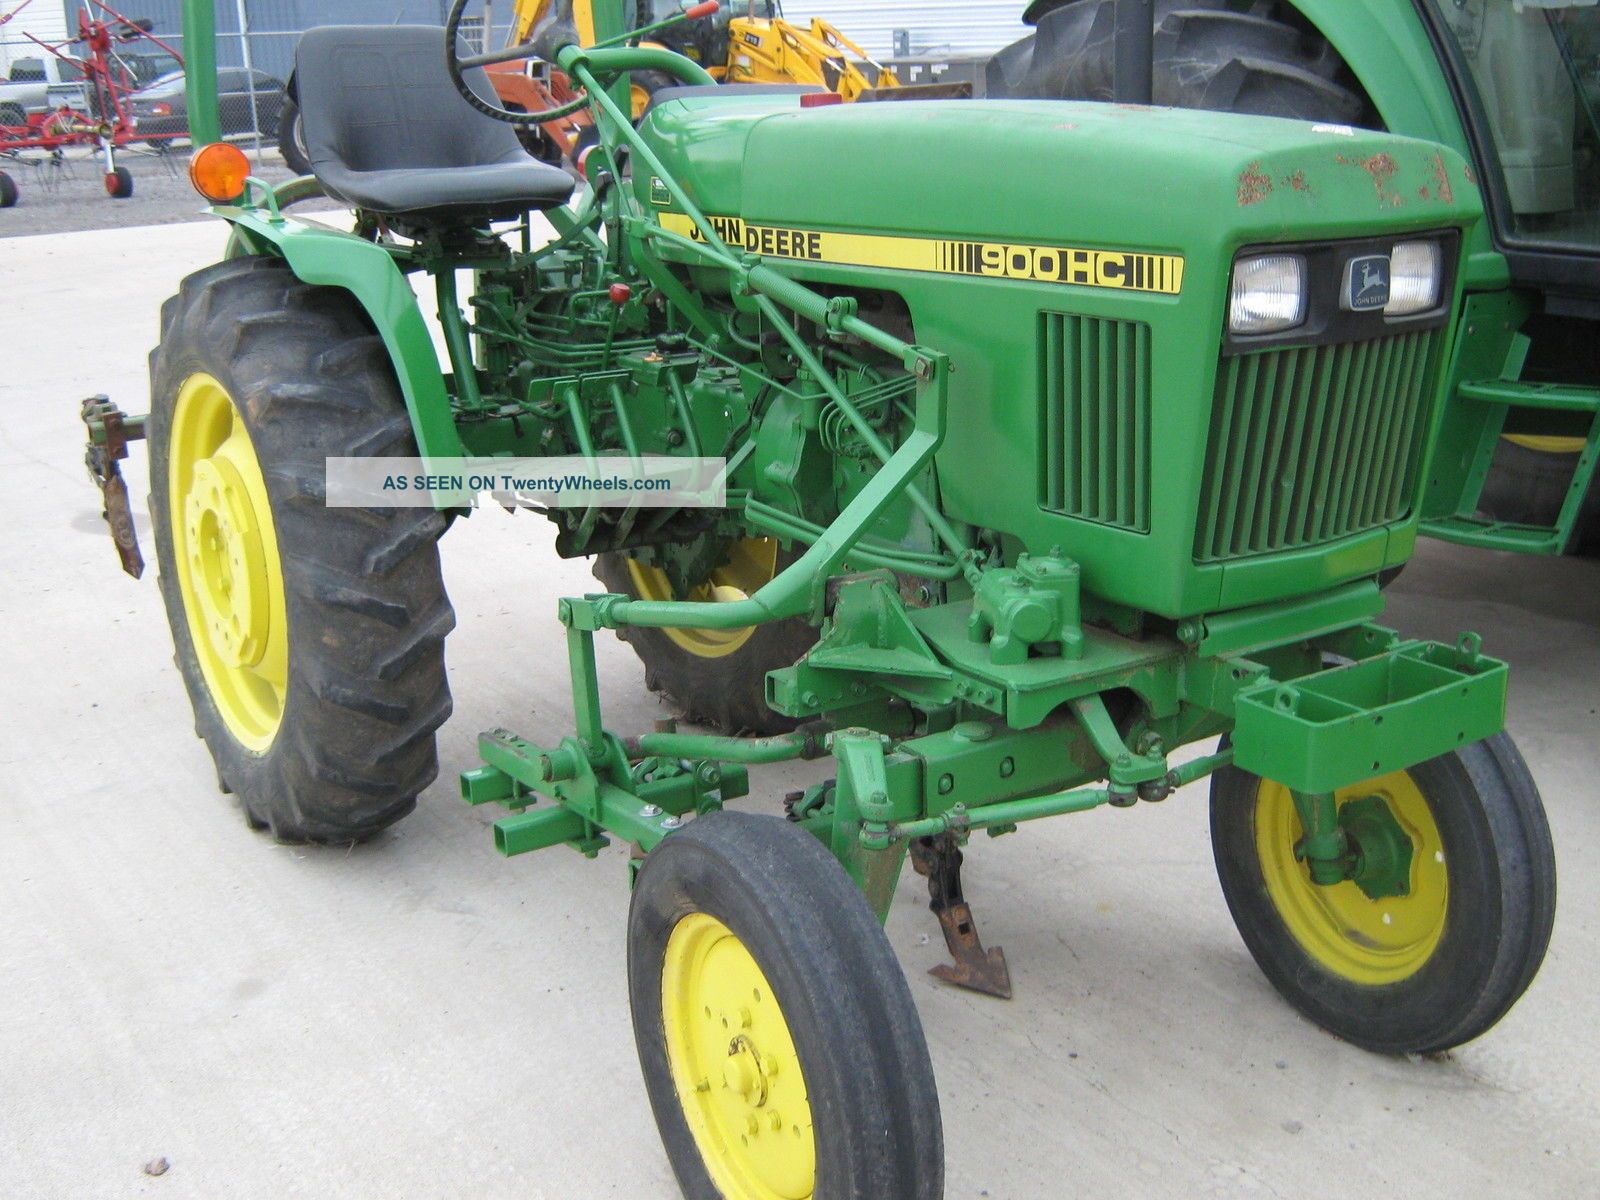 1989 John Deere 900hc Tractor 2wd 25hp Rops Cultivators Farm Garden ...